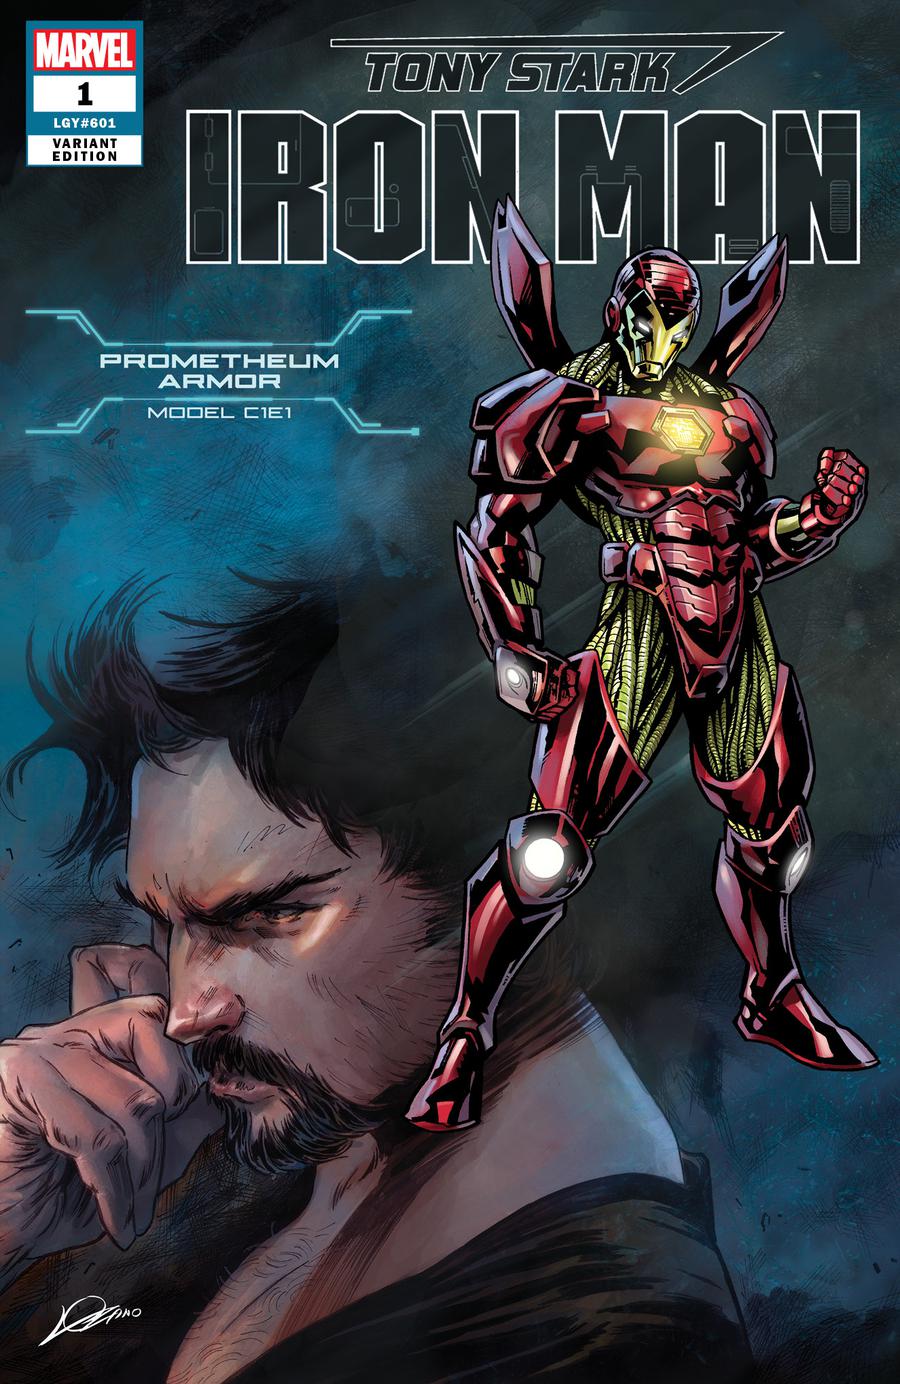 Tony Stark Iron Man #1 Cover H Variant Alexander Lozano & Valerio Schiti Model C1E1 Prometheum Armor Cover